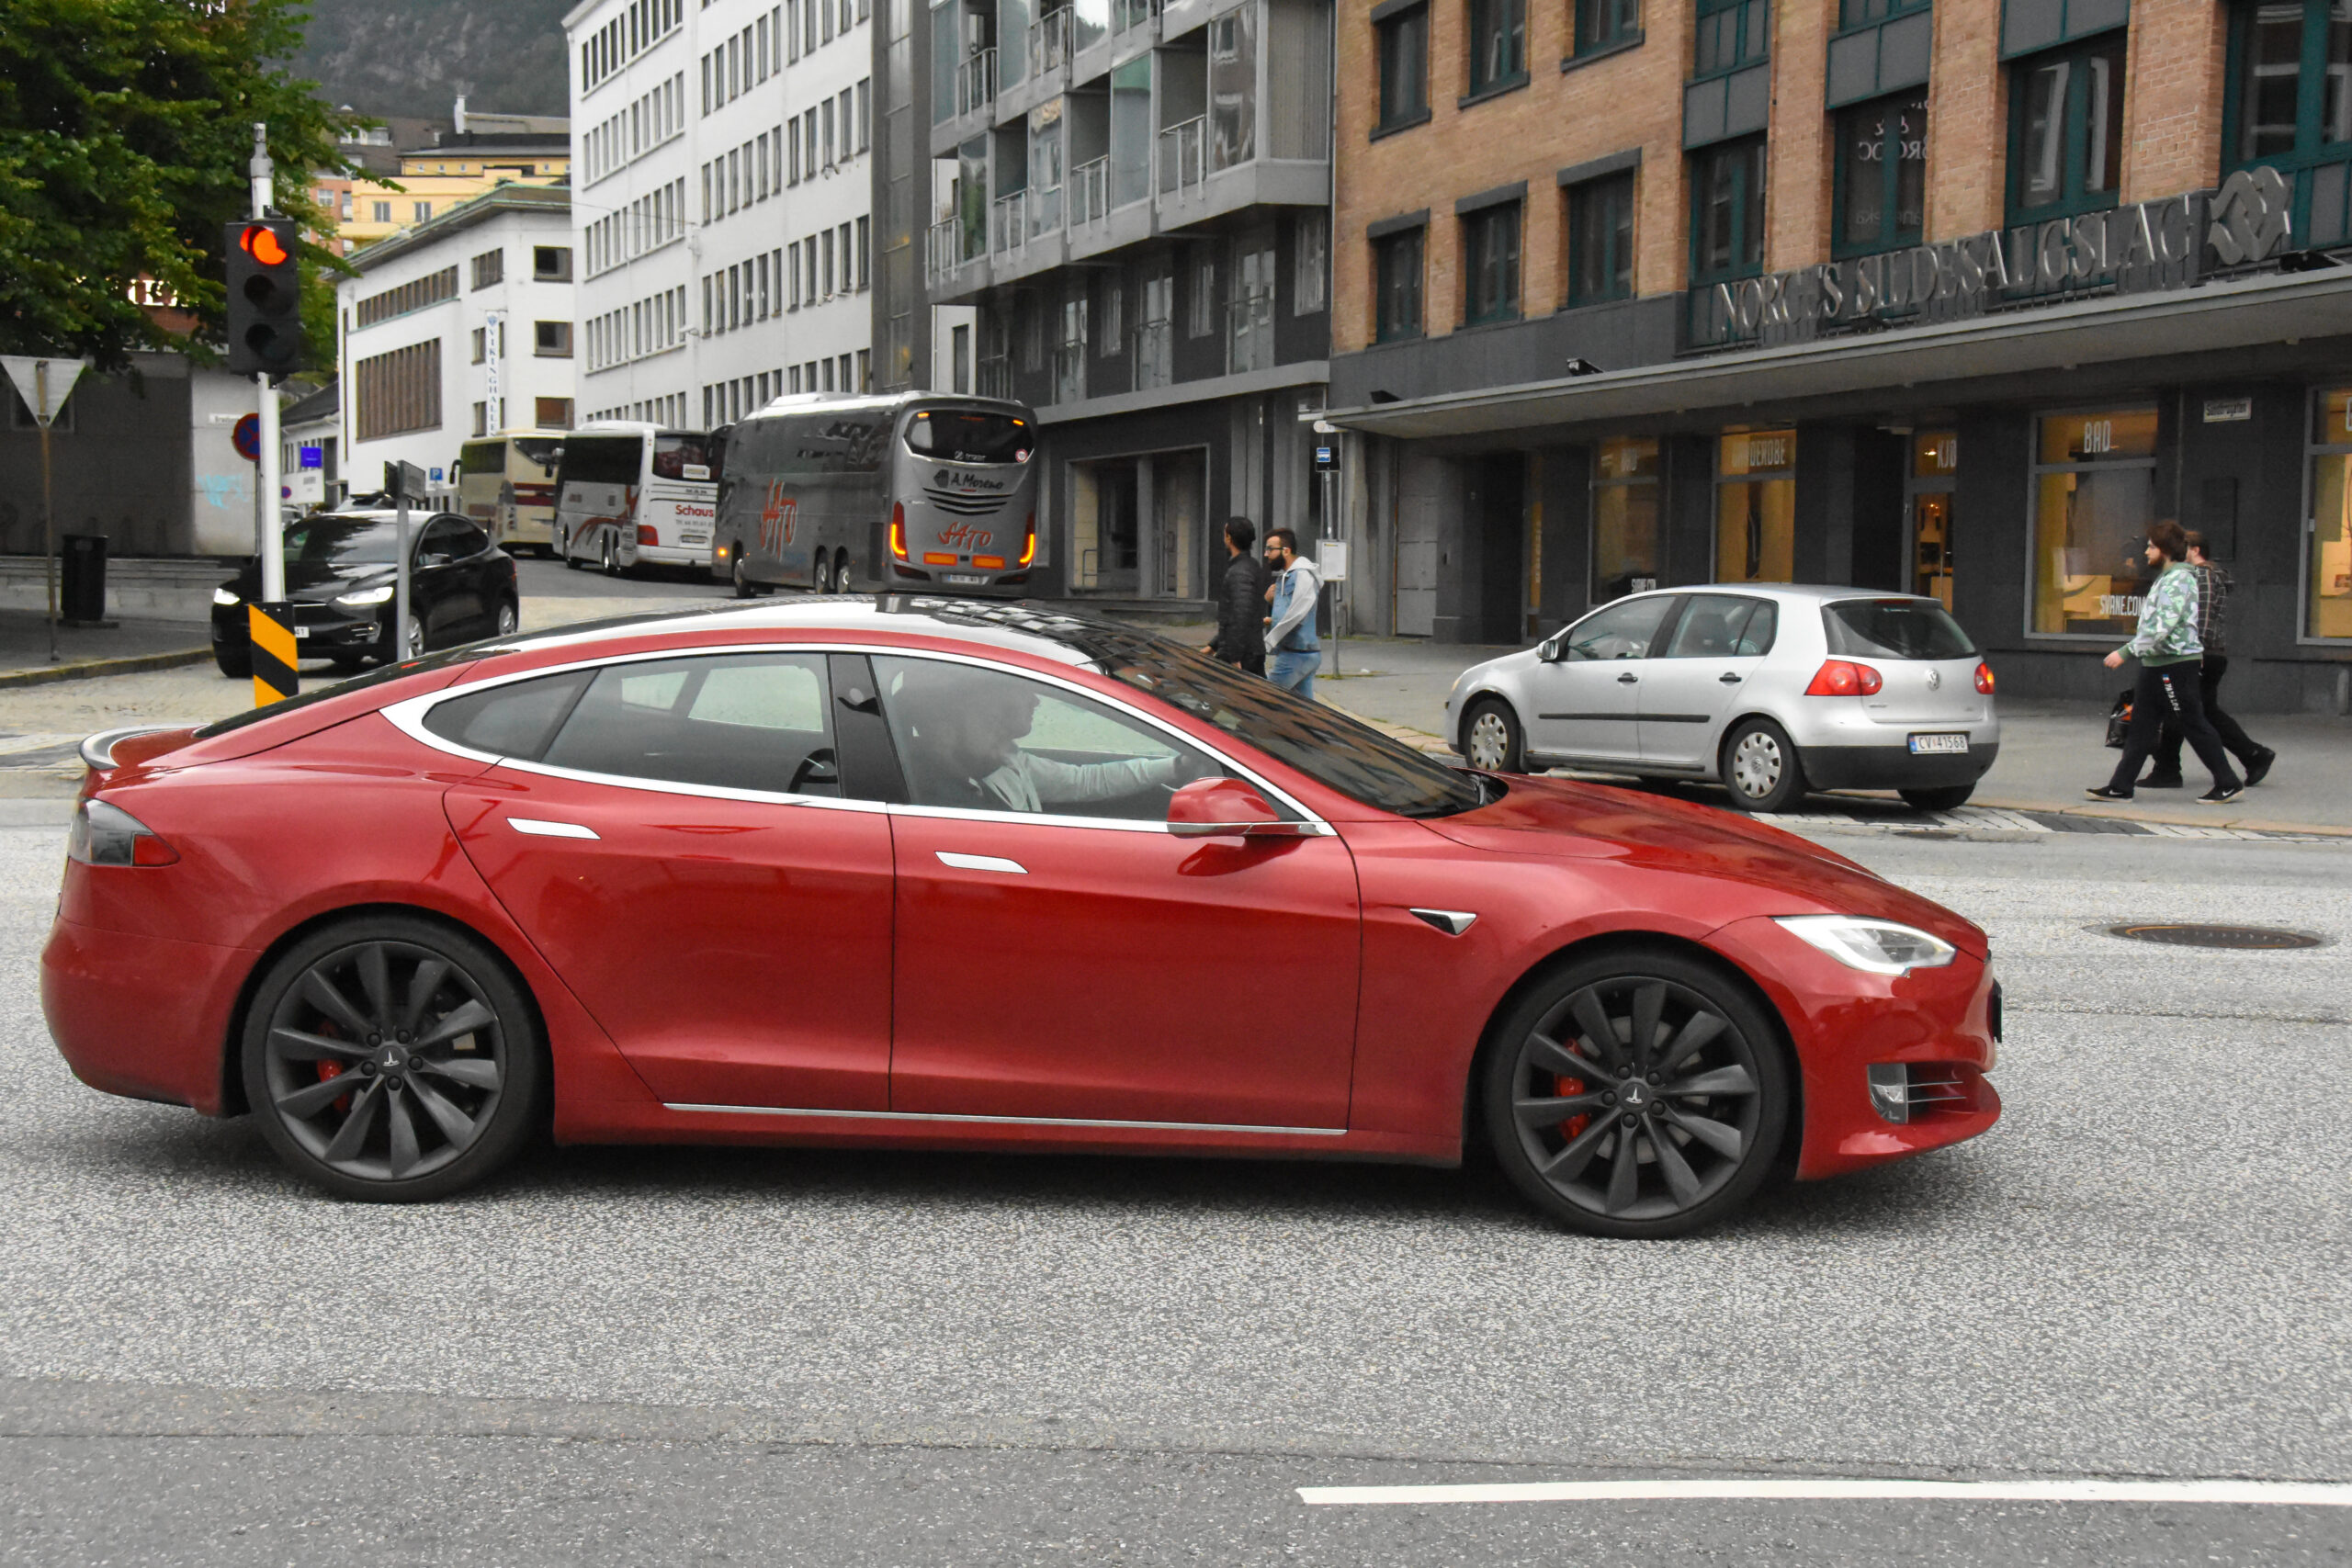 Tesla Jailbreak Unlocks Theft of In-Car Paid Features – Source: www.darkreading.com